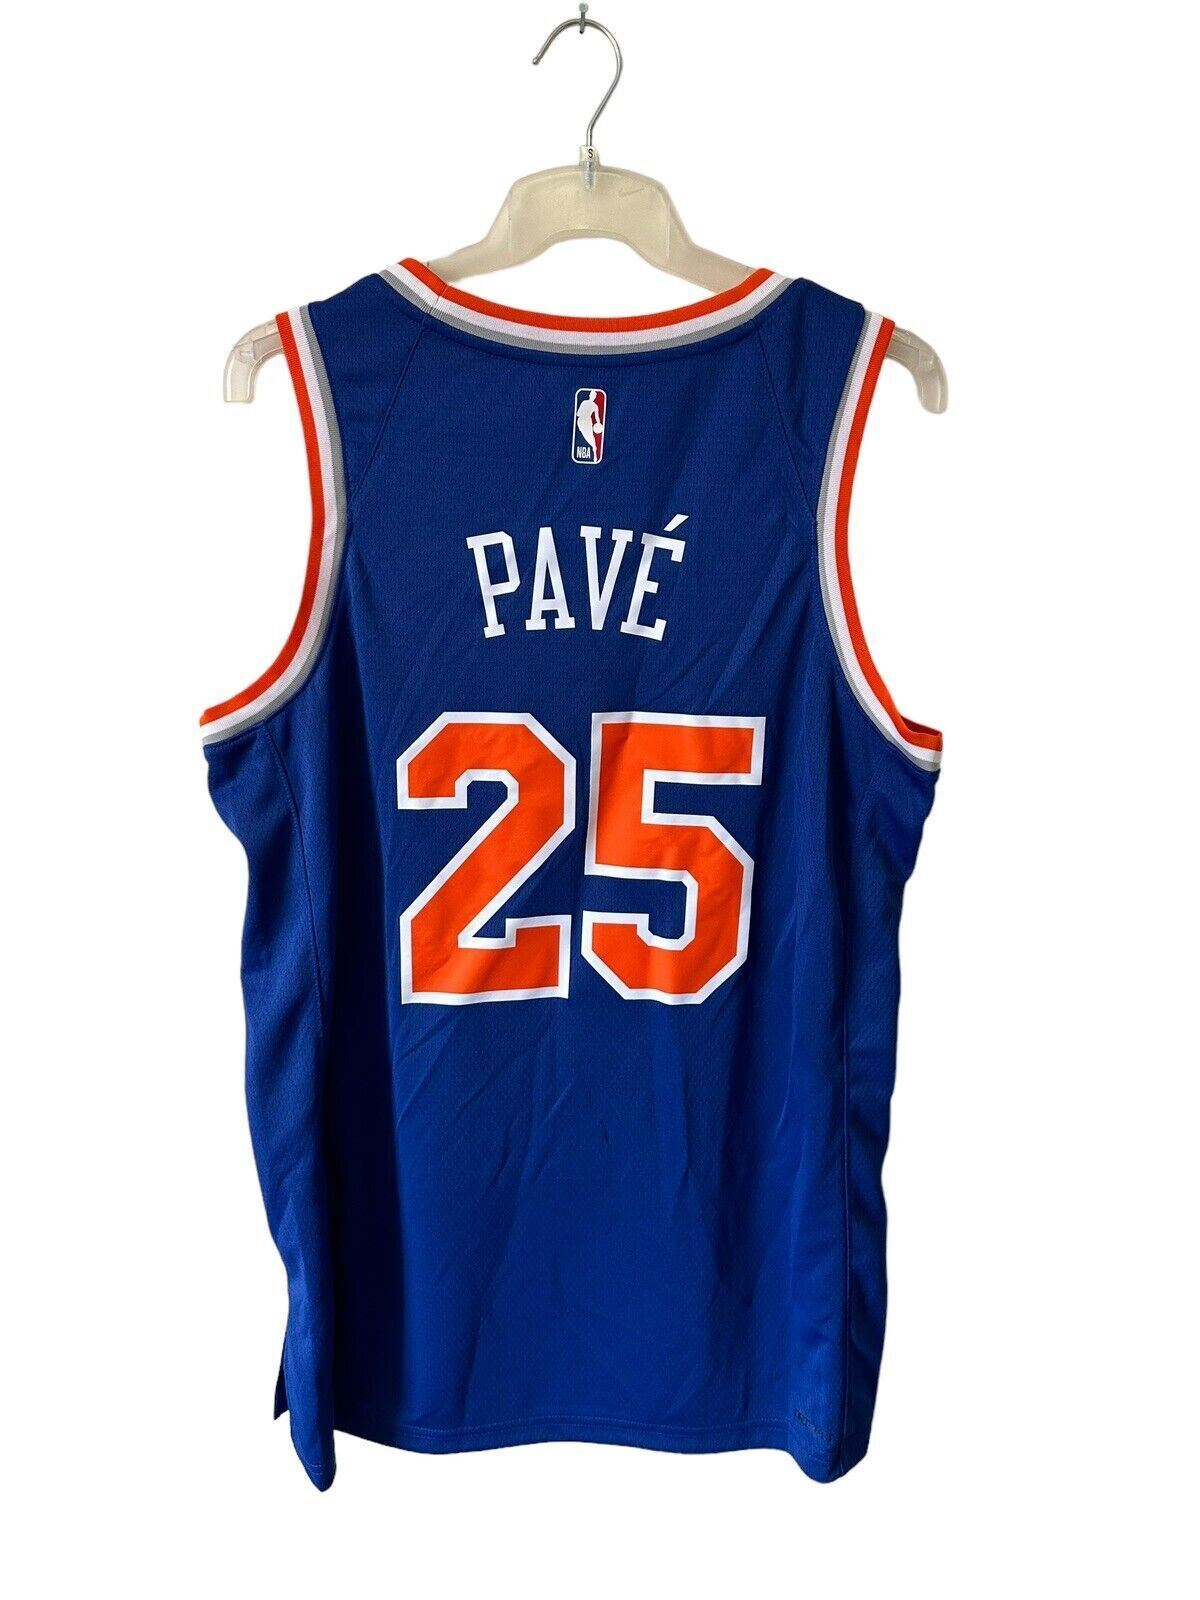 Nike NBA New York Knicks Icon Edition Jersey PAVE 25 Men’s Large